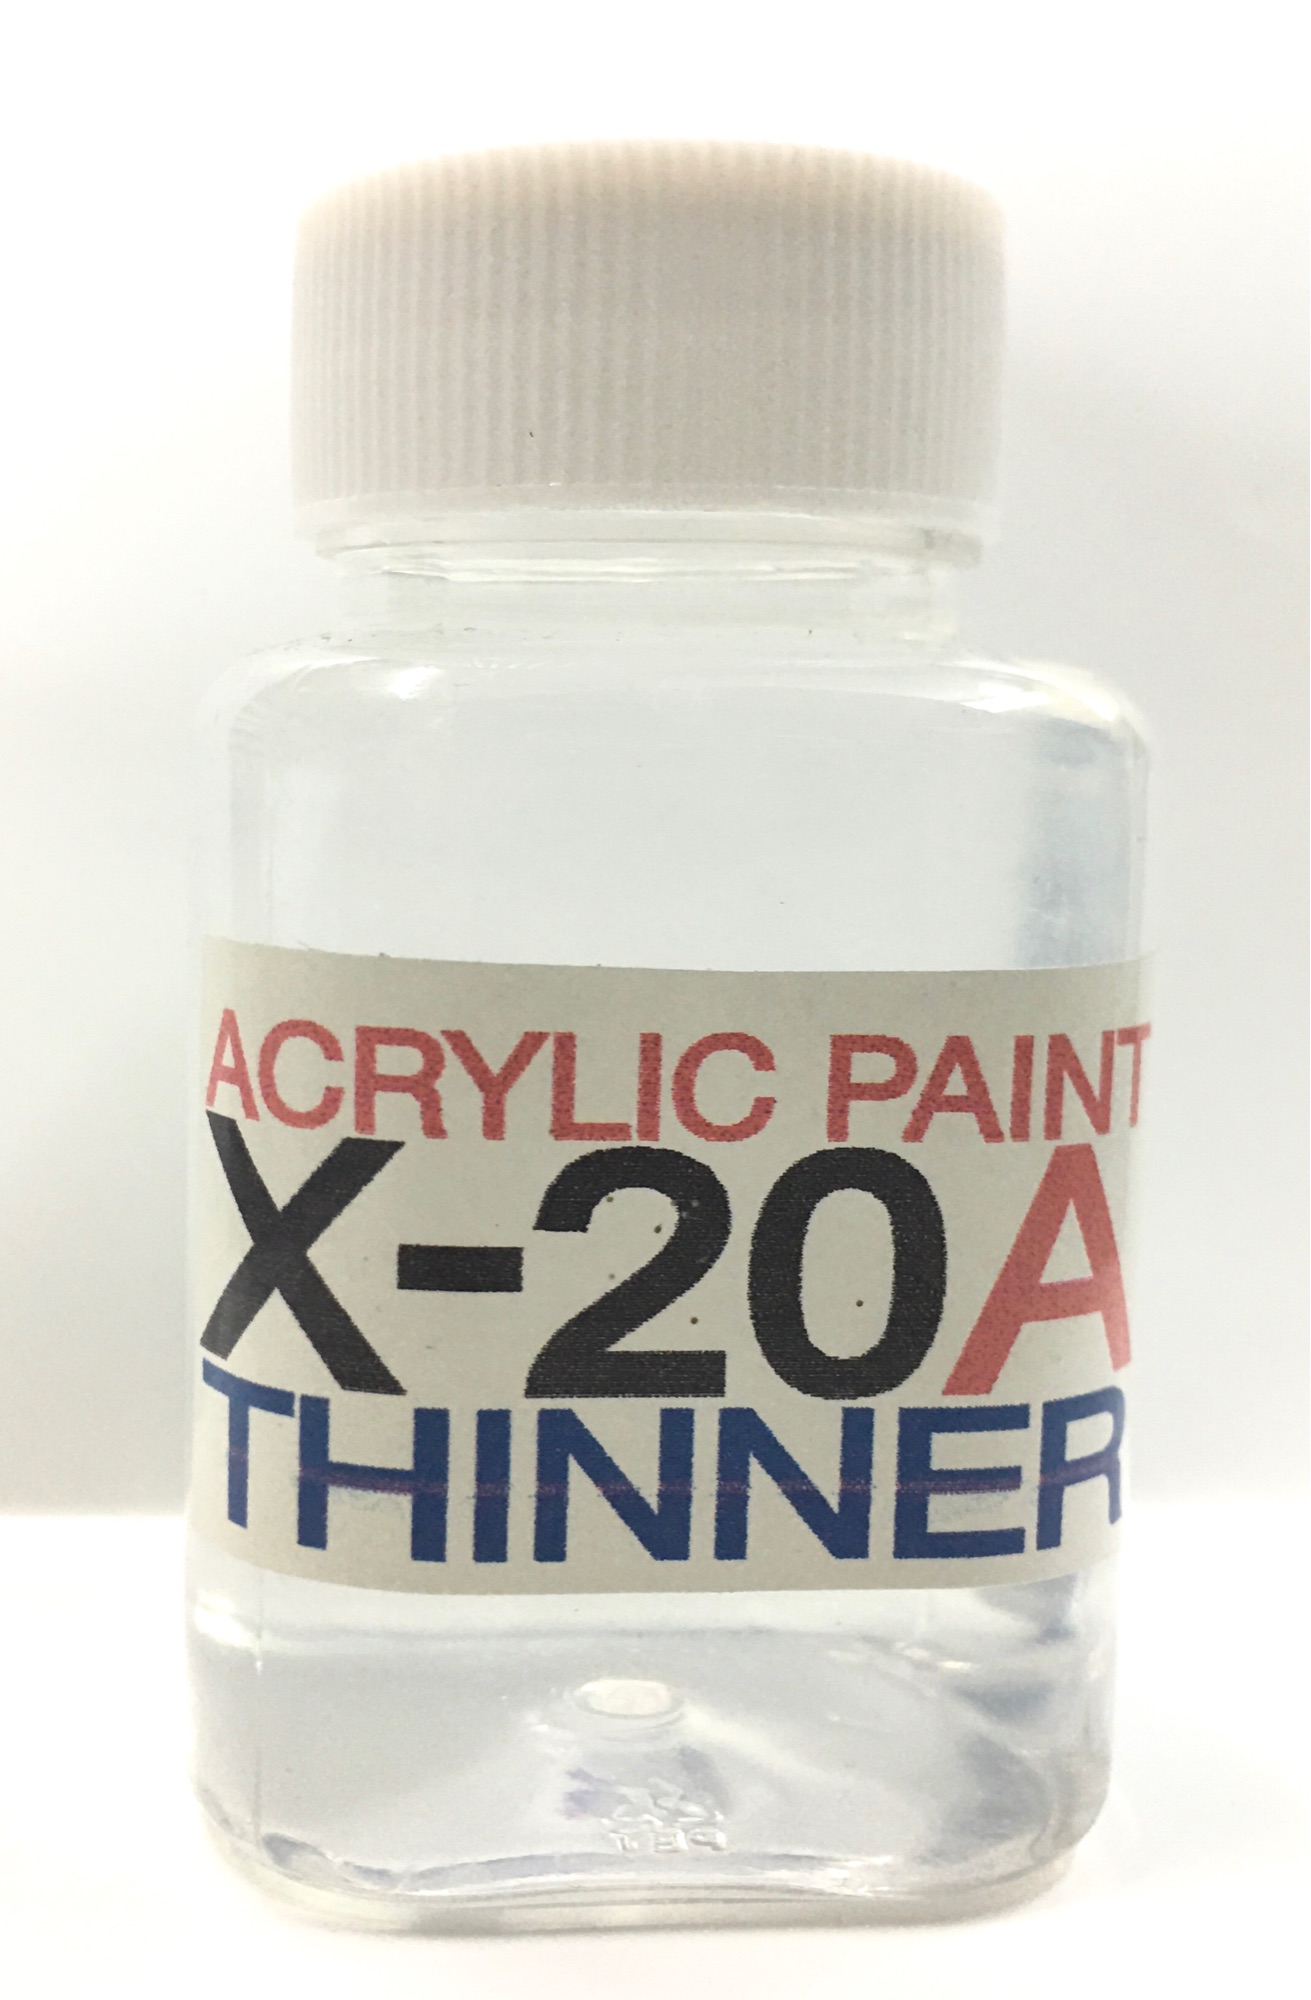 Tamiya X-20A - Acrylic/Poly Thinner 46ml - Hub Hobby